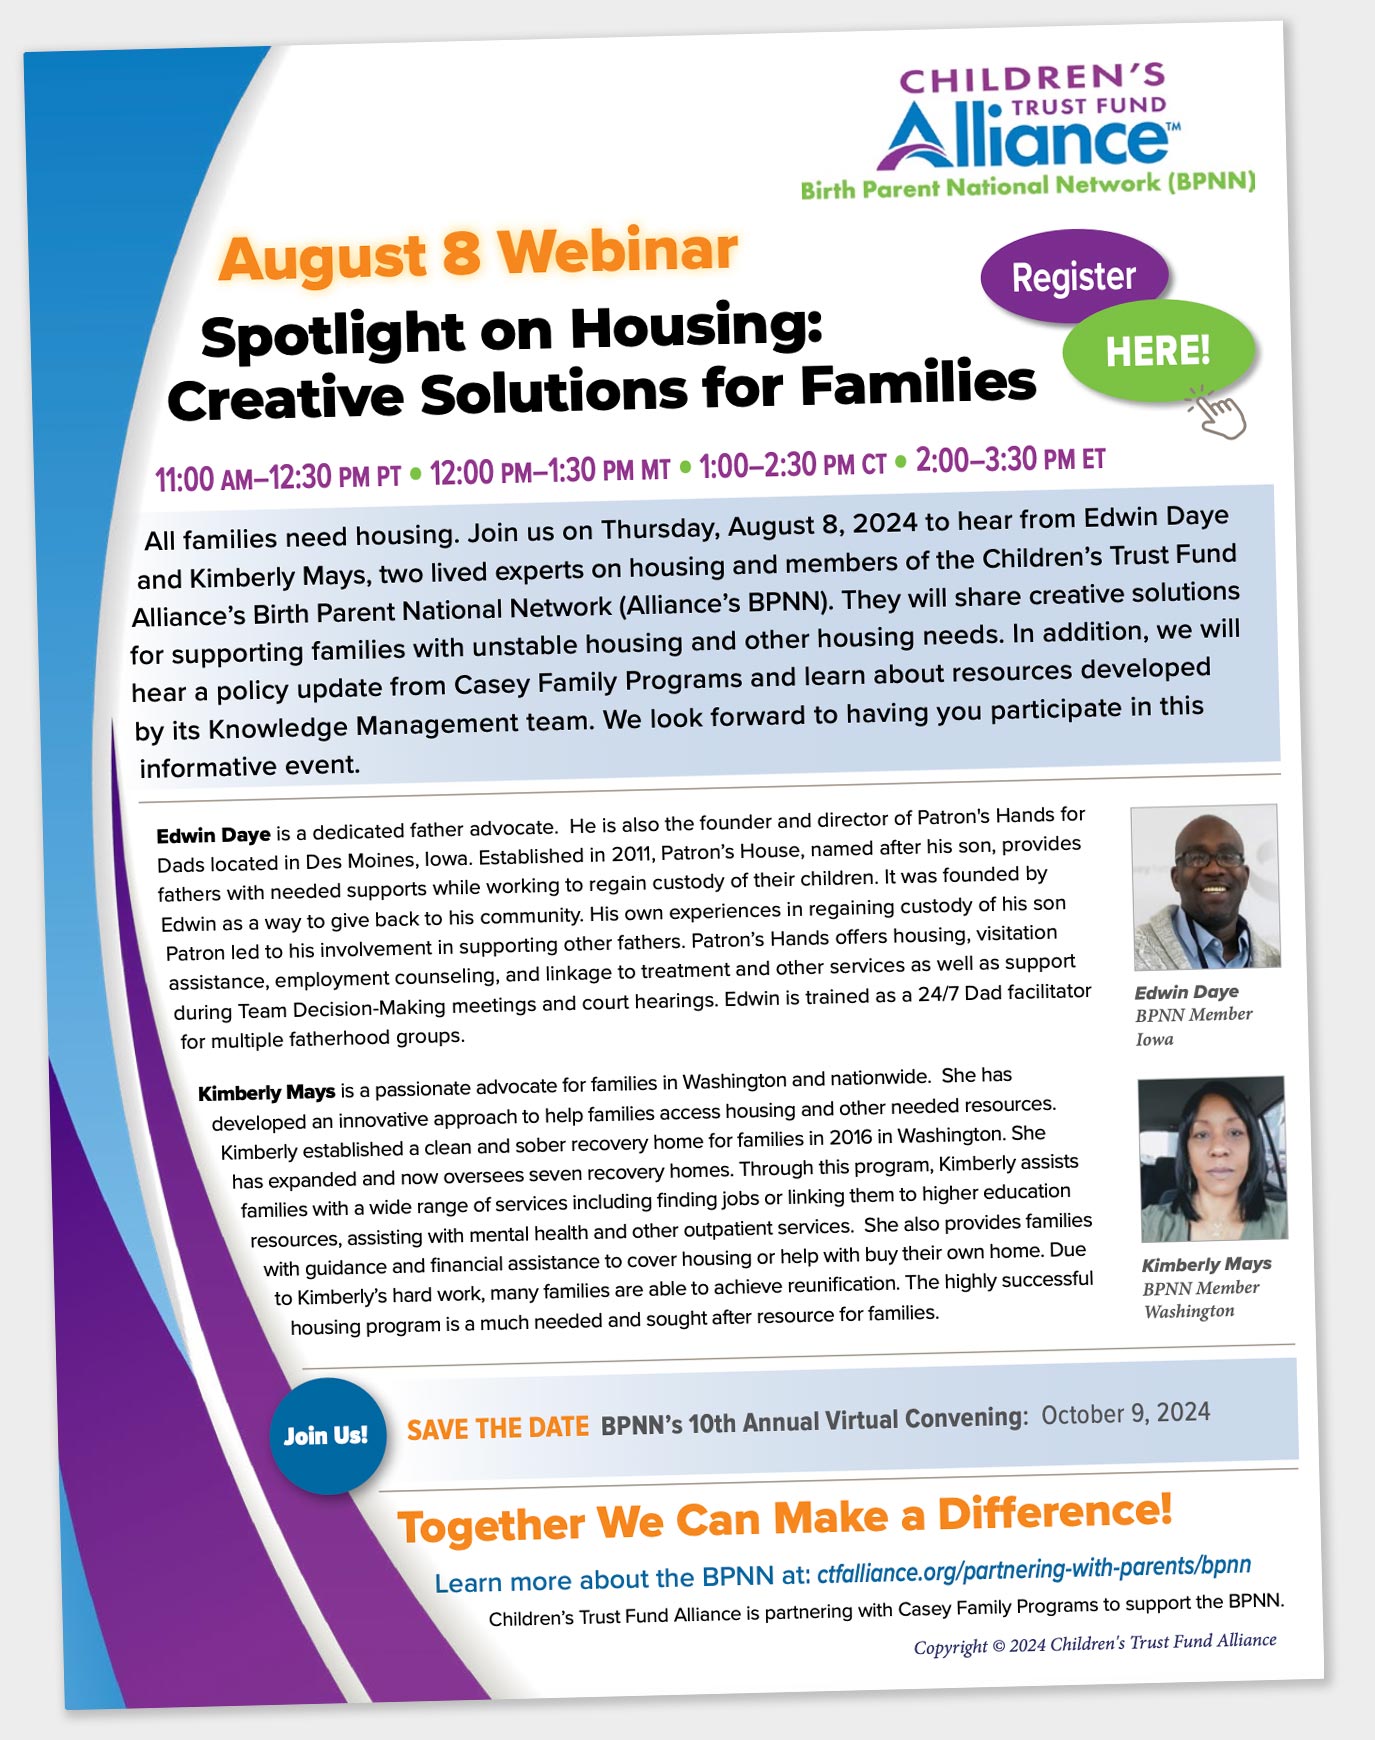 BPNN Webinar: Spotlight on Housing: Creative Solutions for Families